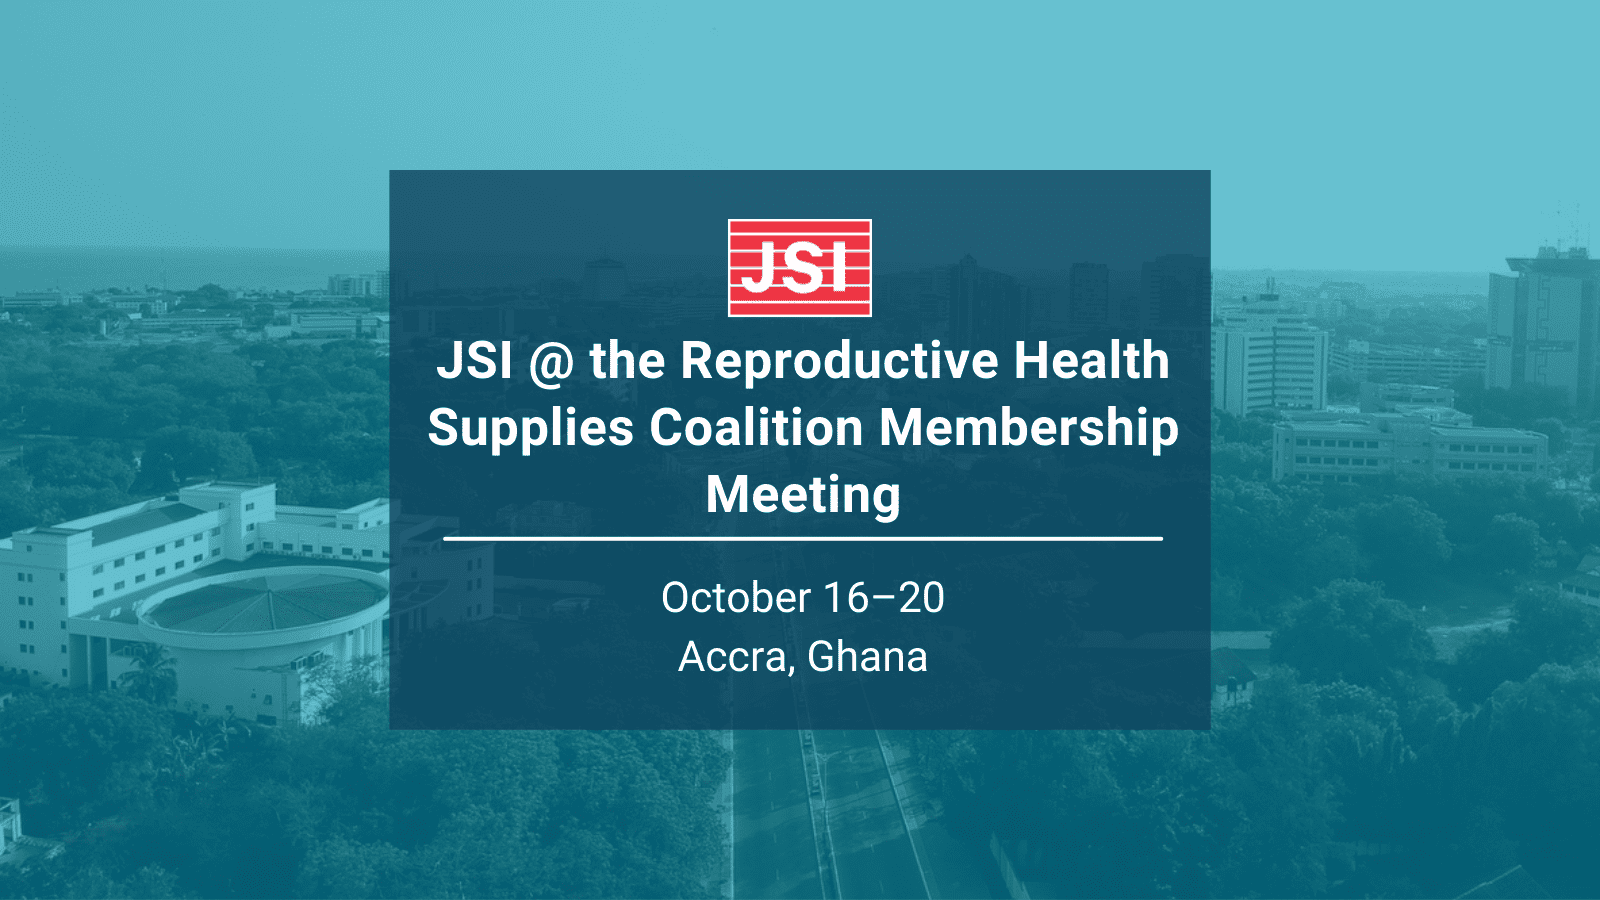 Join JSI at the 20th Reproductive Health Supplies Coalition Membership Meeting